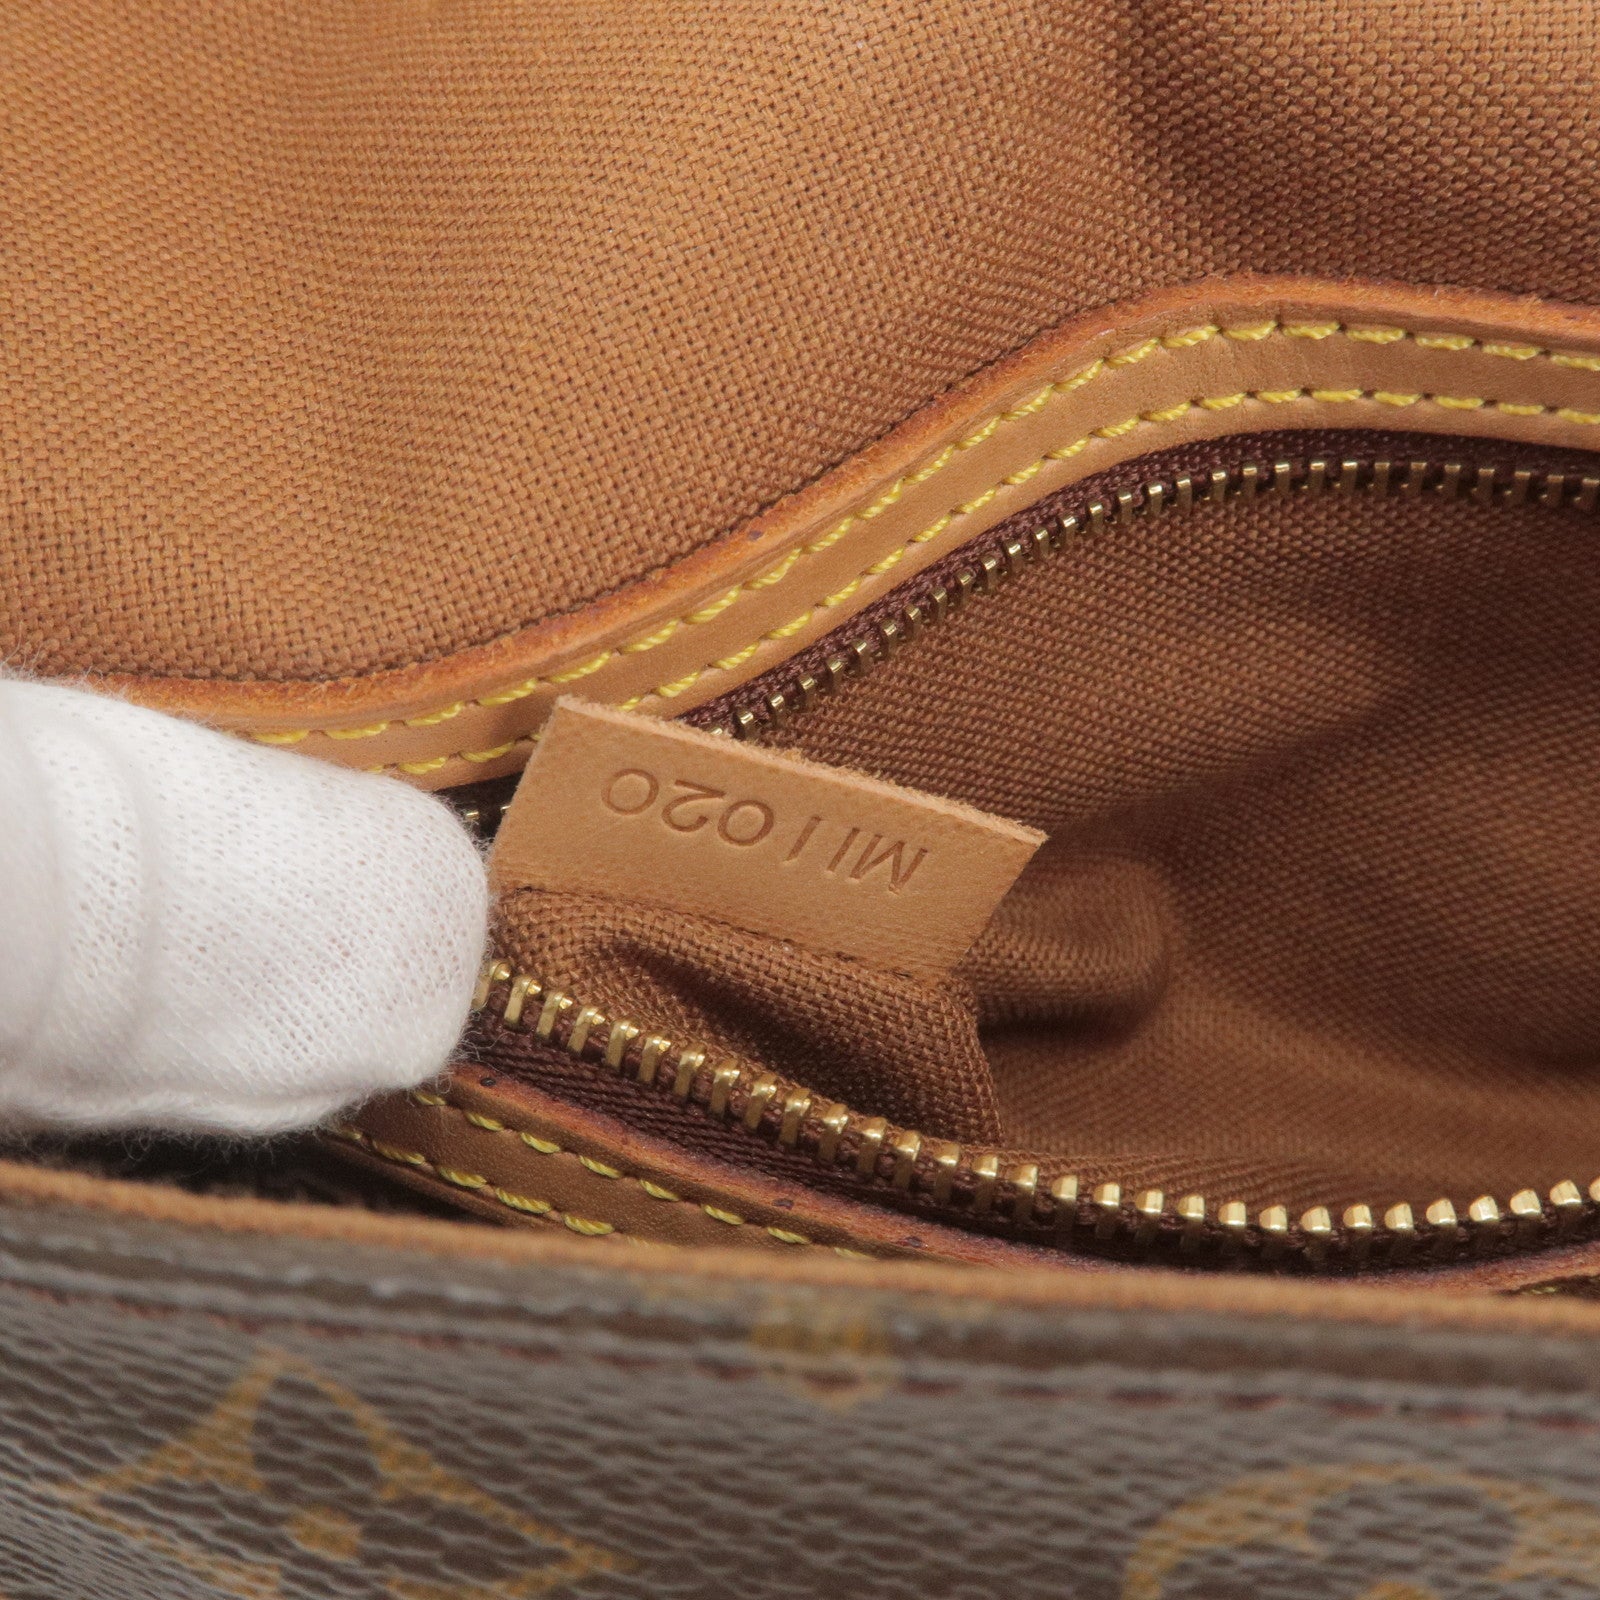 Louis Vuitton Neo Greenwich travel bag in brown canvas, golden